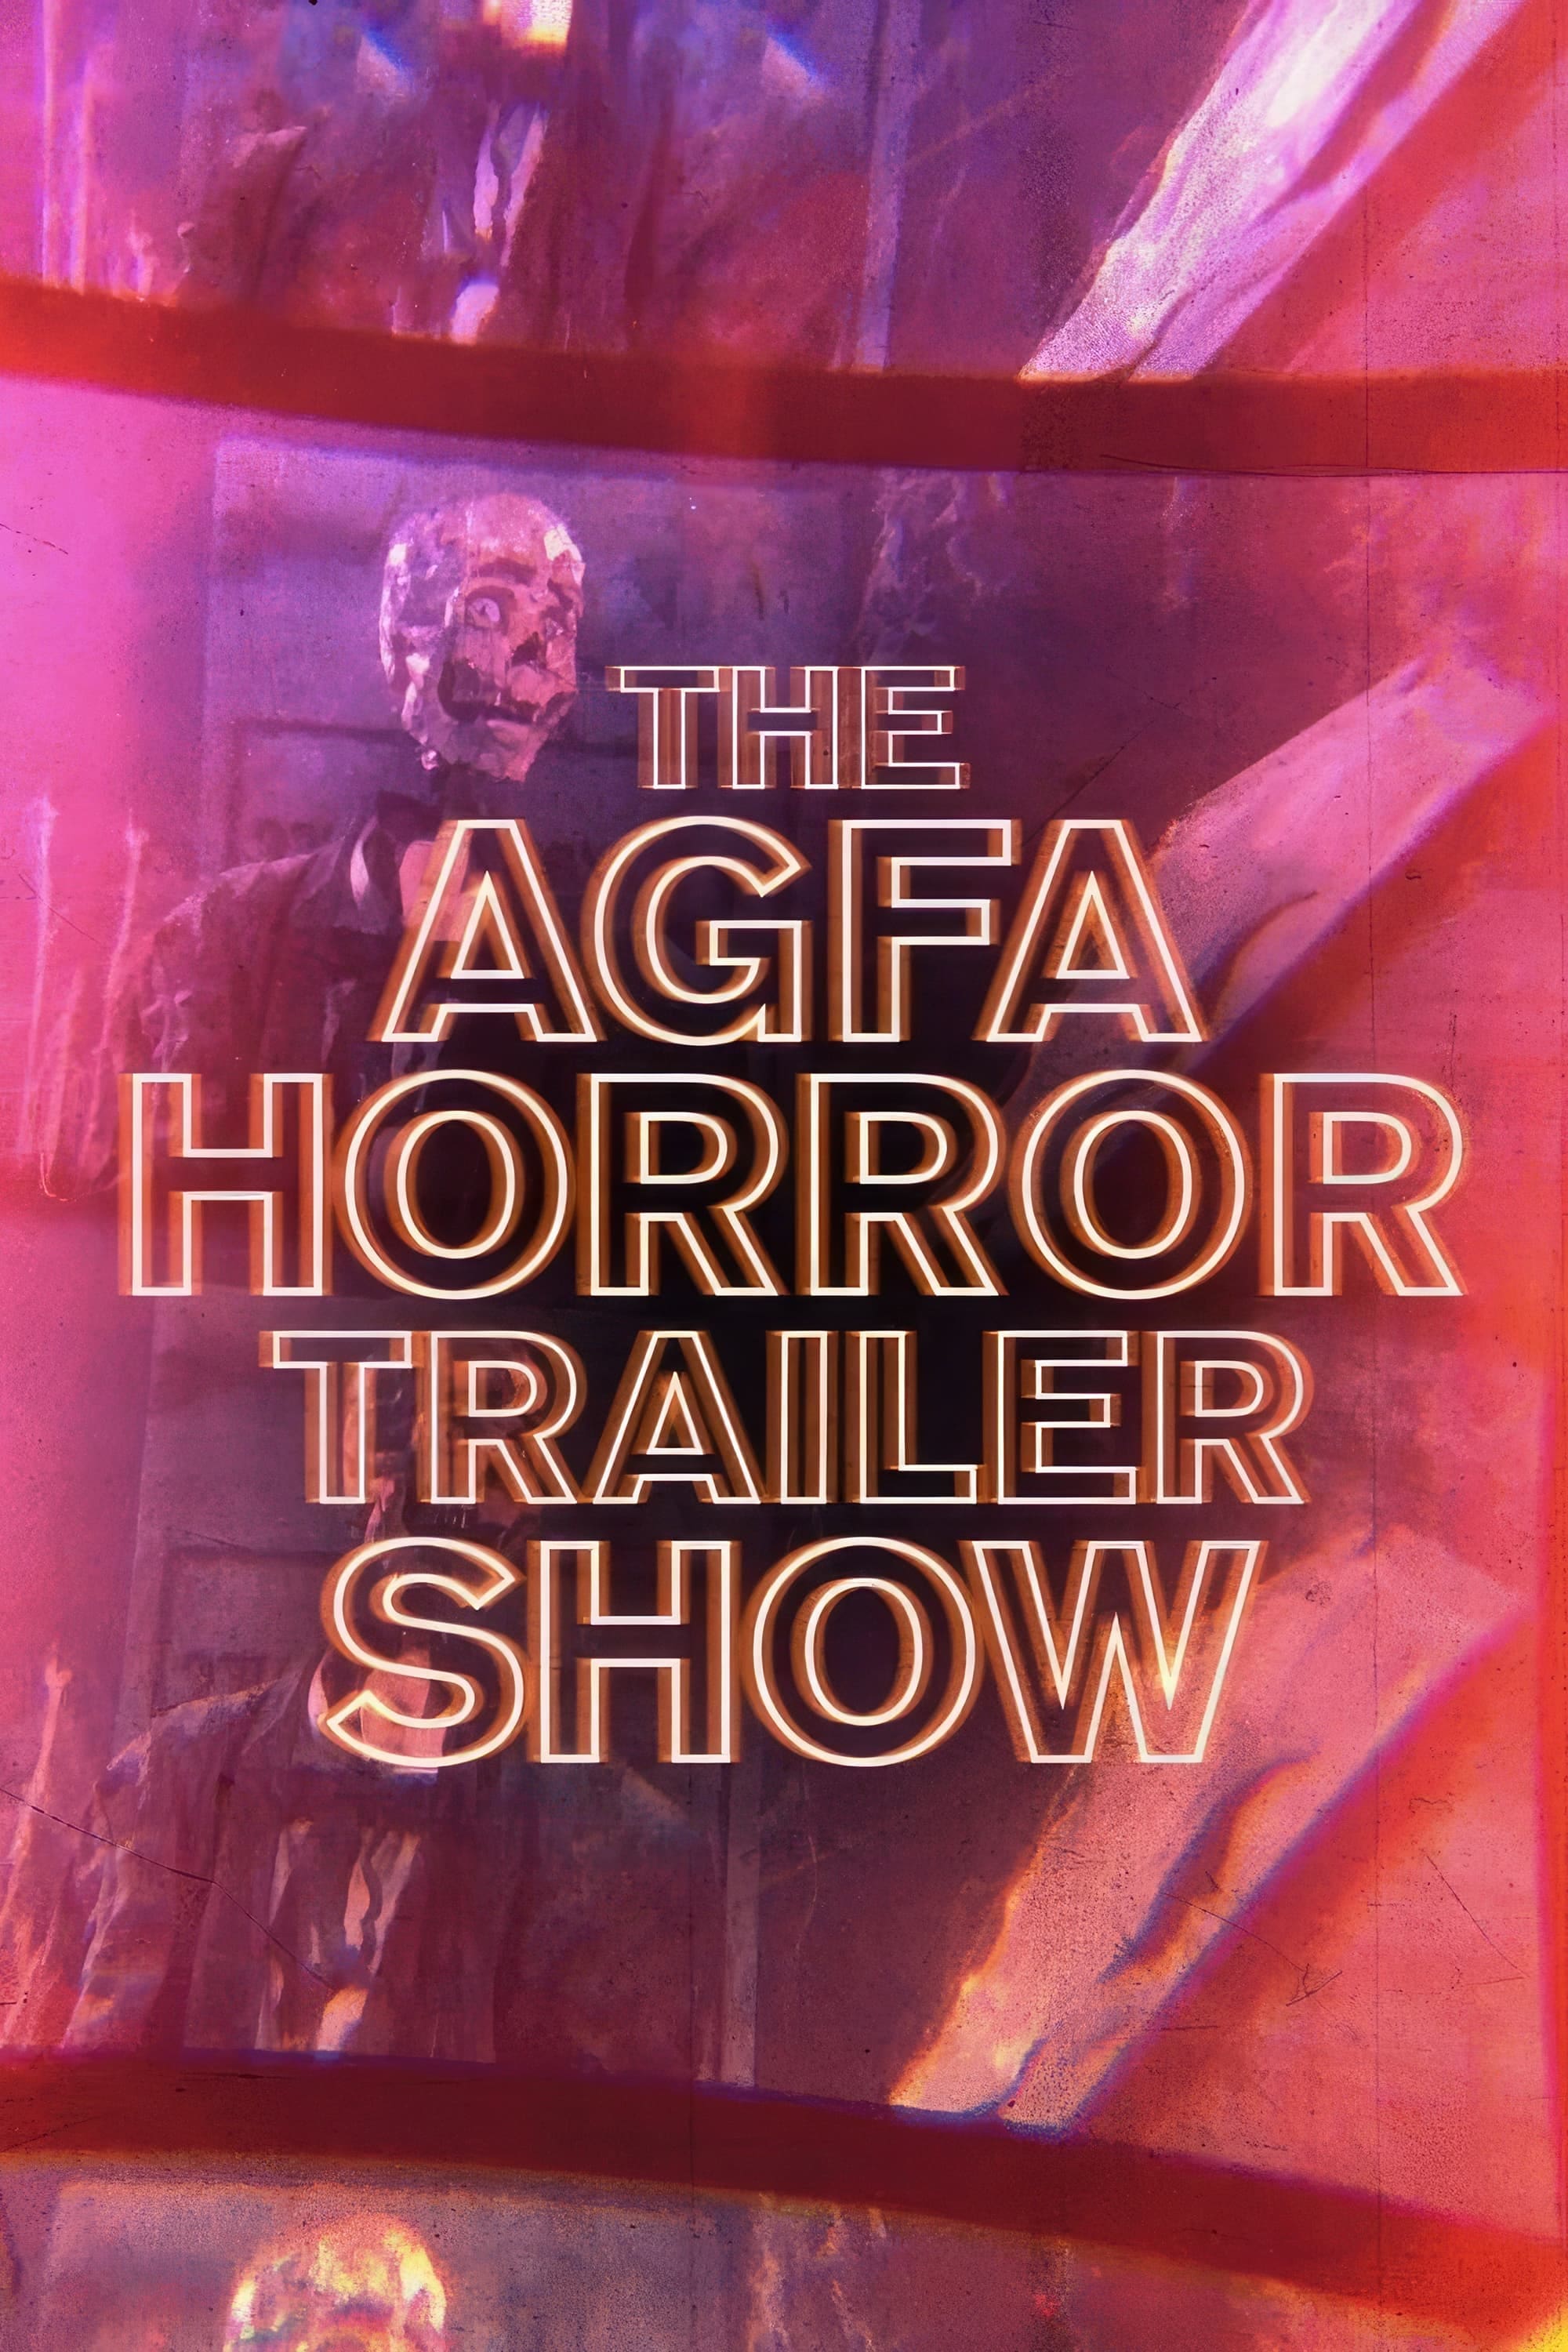 The AGFA Horror Trailer Show